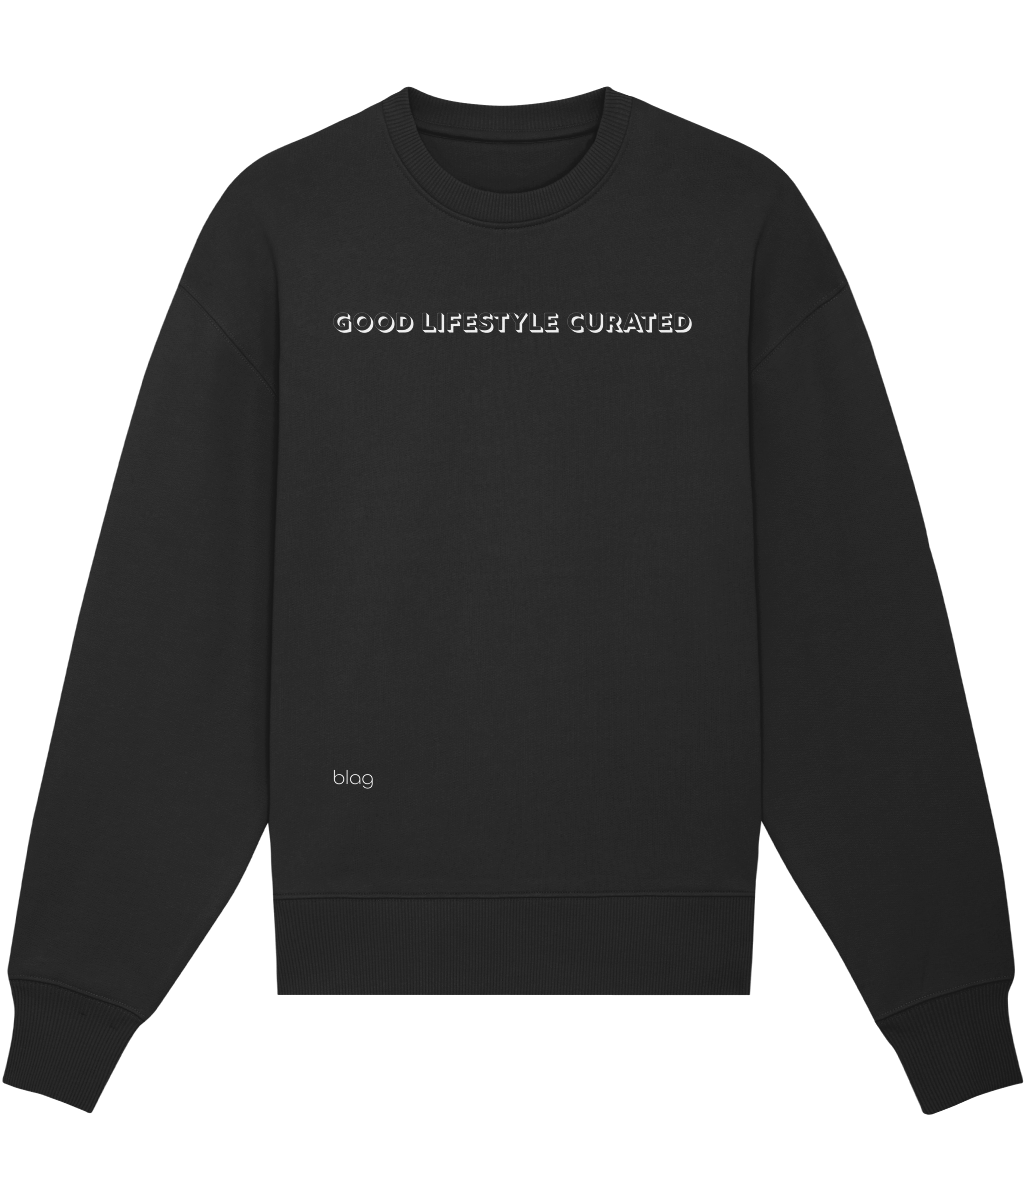 Good lifestyle Curated Premium Sweatshirt